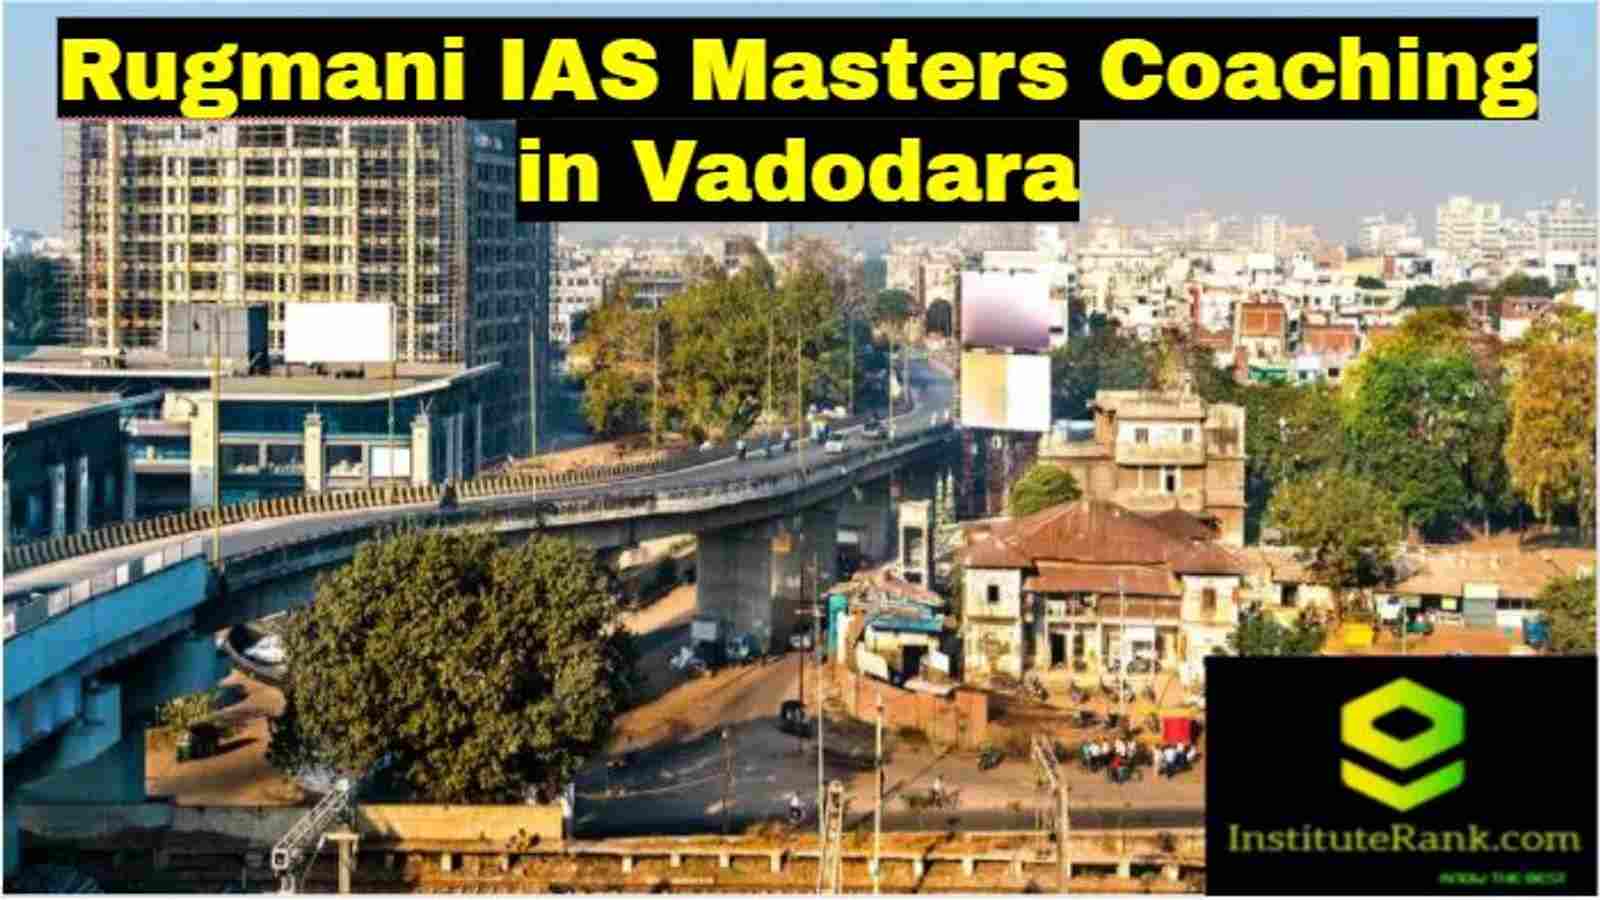 Rugmani IAS Masters Coaching in Vadodara